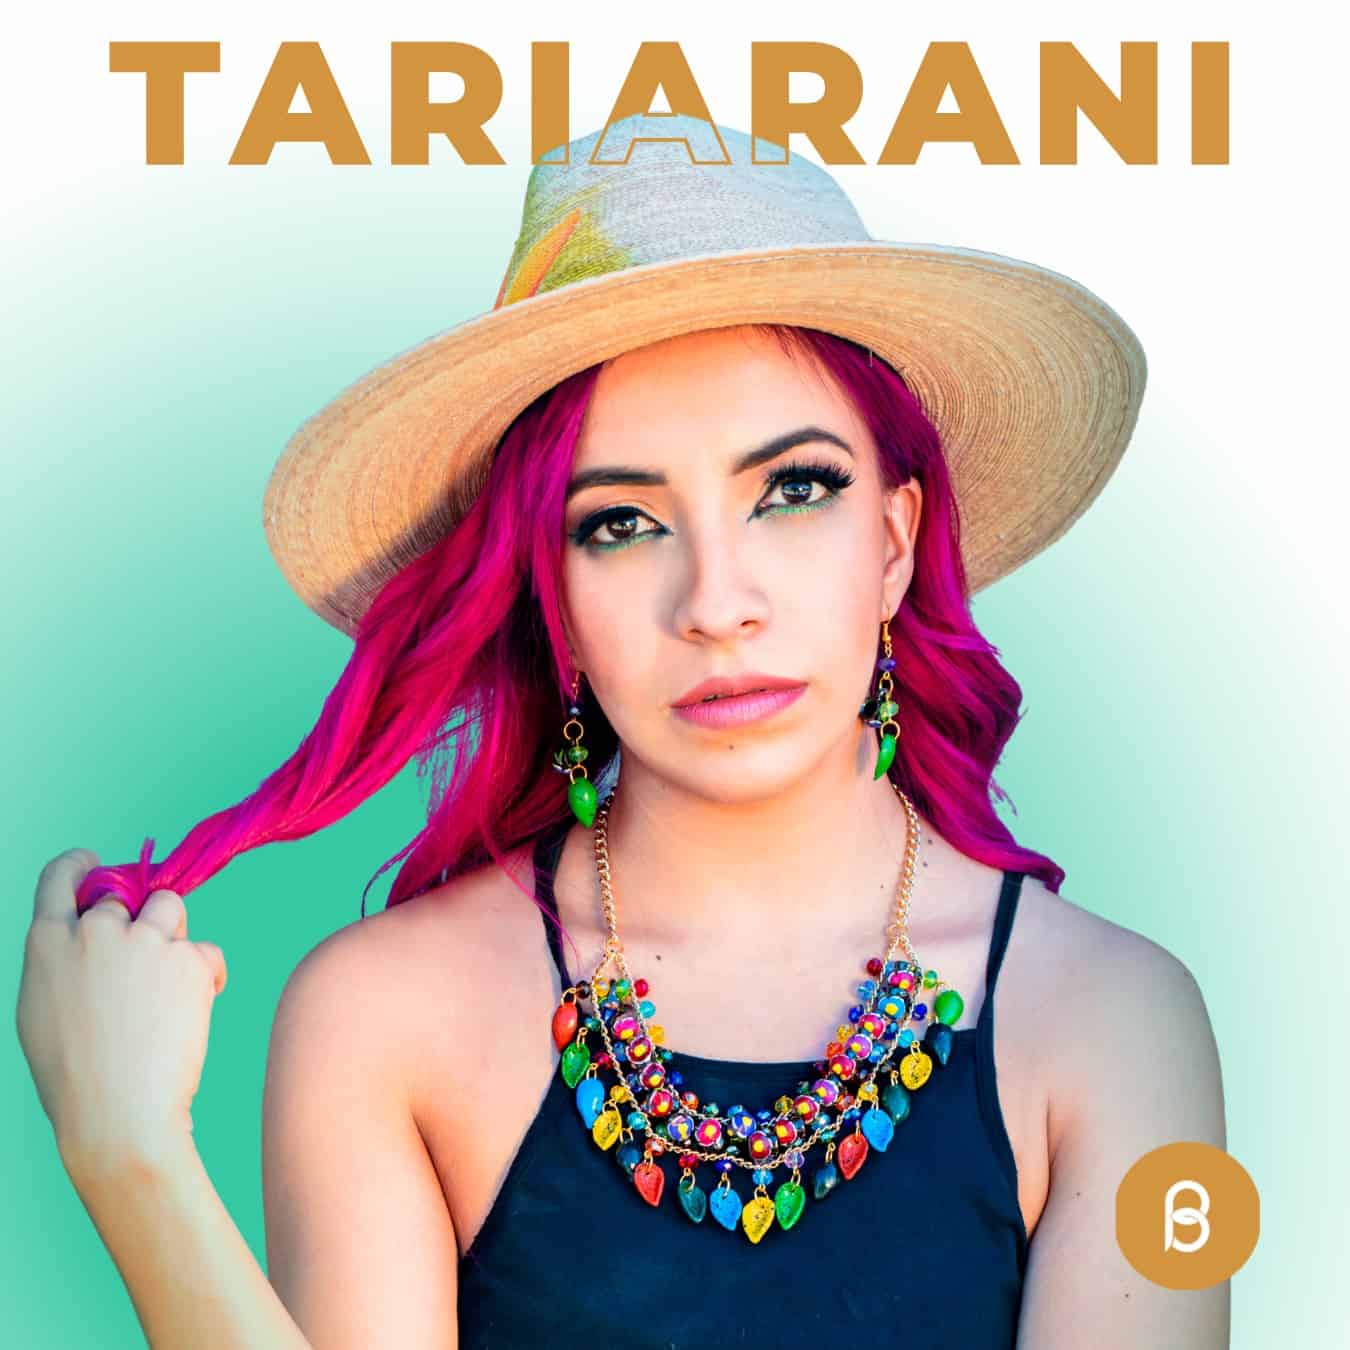 Tariarani - Collar de Alfarería Artesanal Pintado a Mano - Collar de Alfarería Artesanal